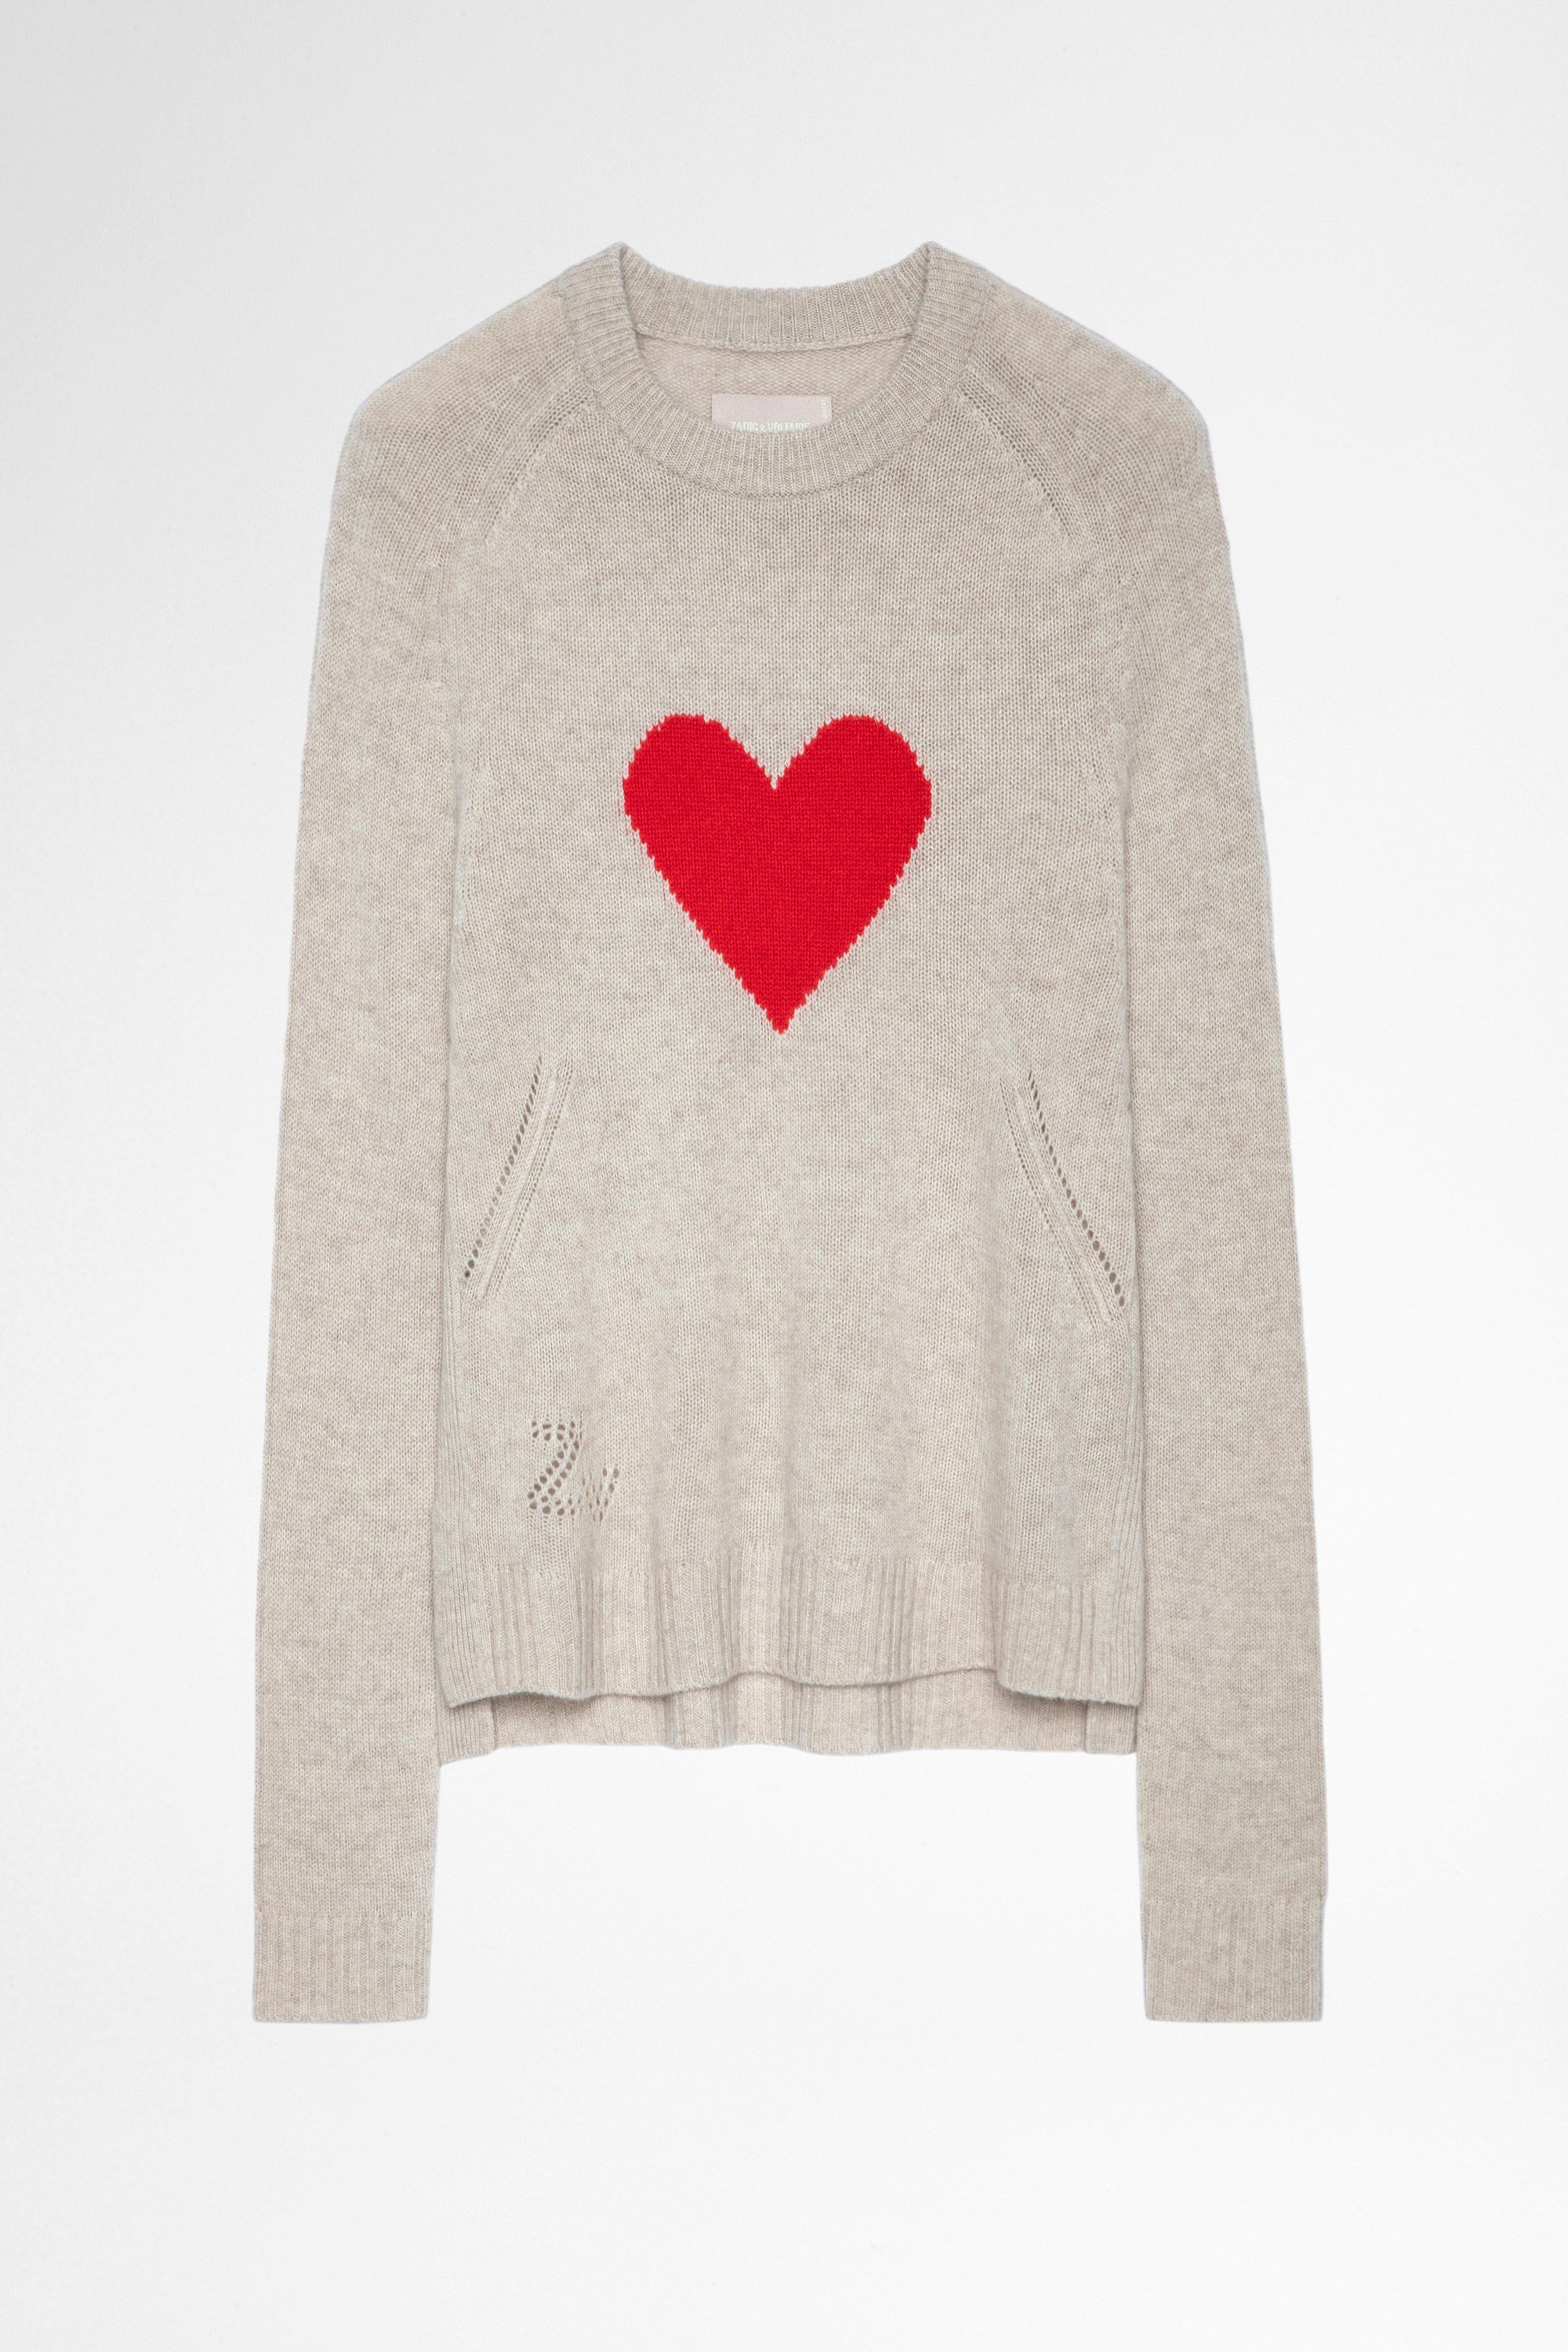 Lili Heart カシミヤスウェット Women's beige cashmere sweater with heart print